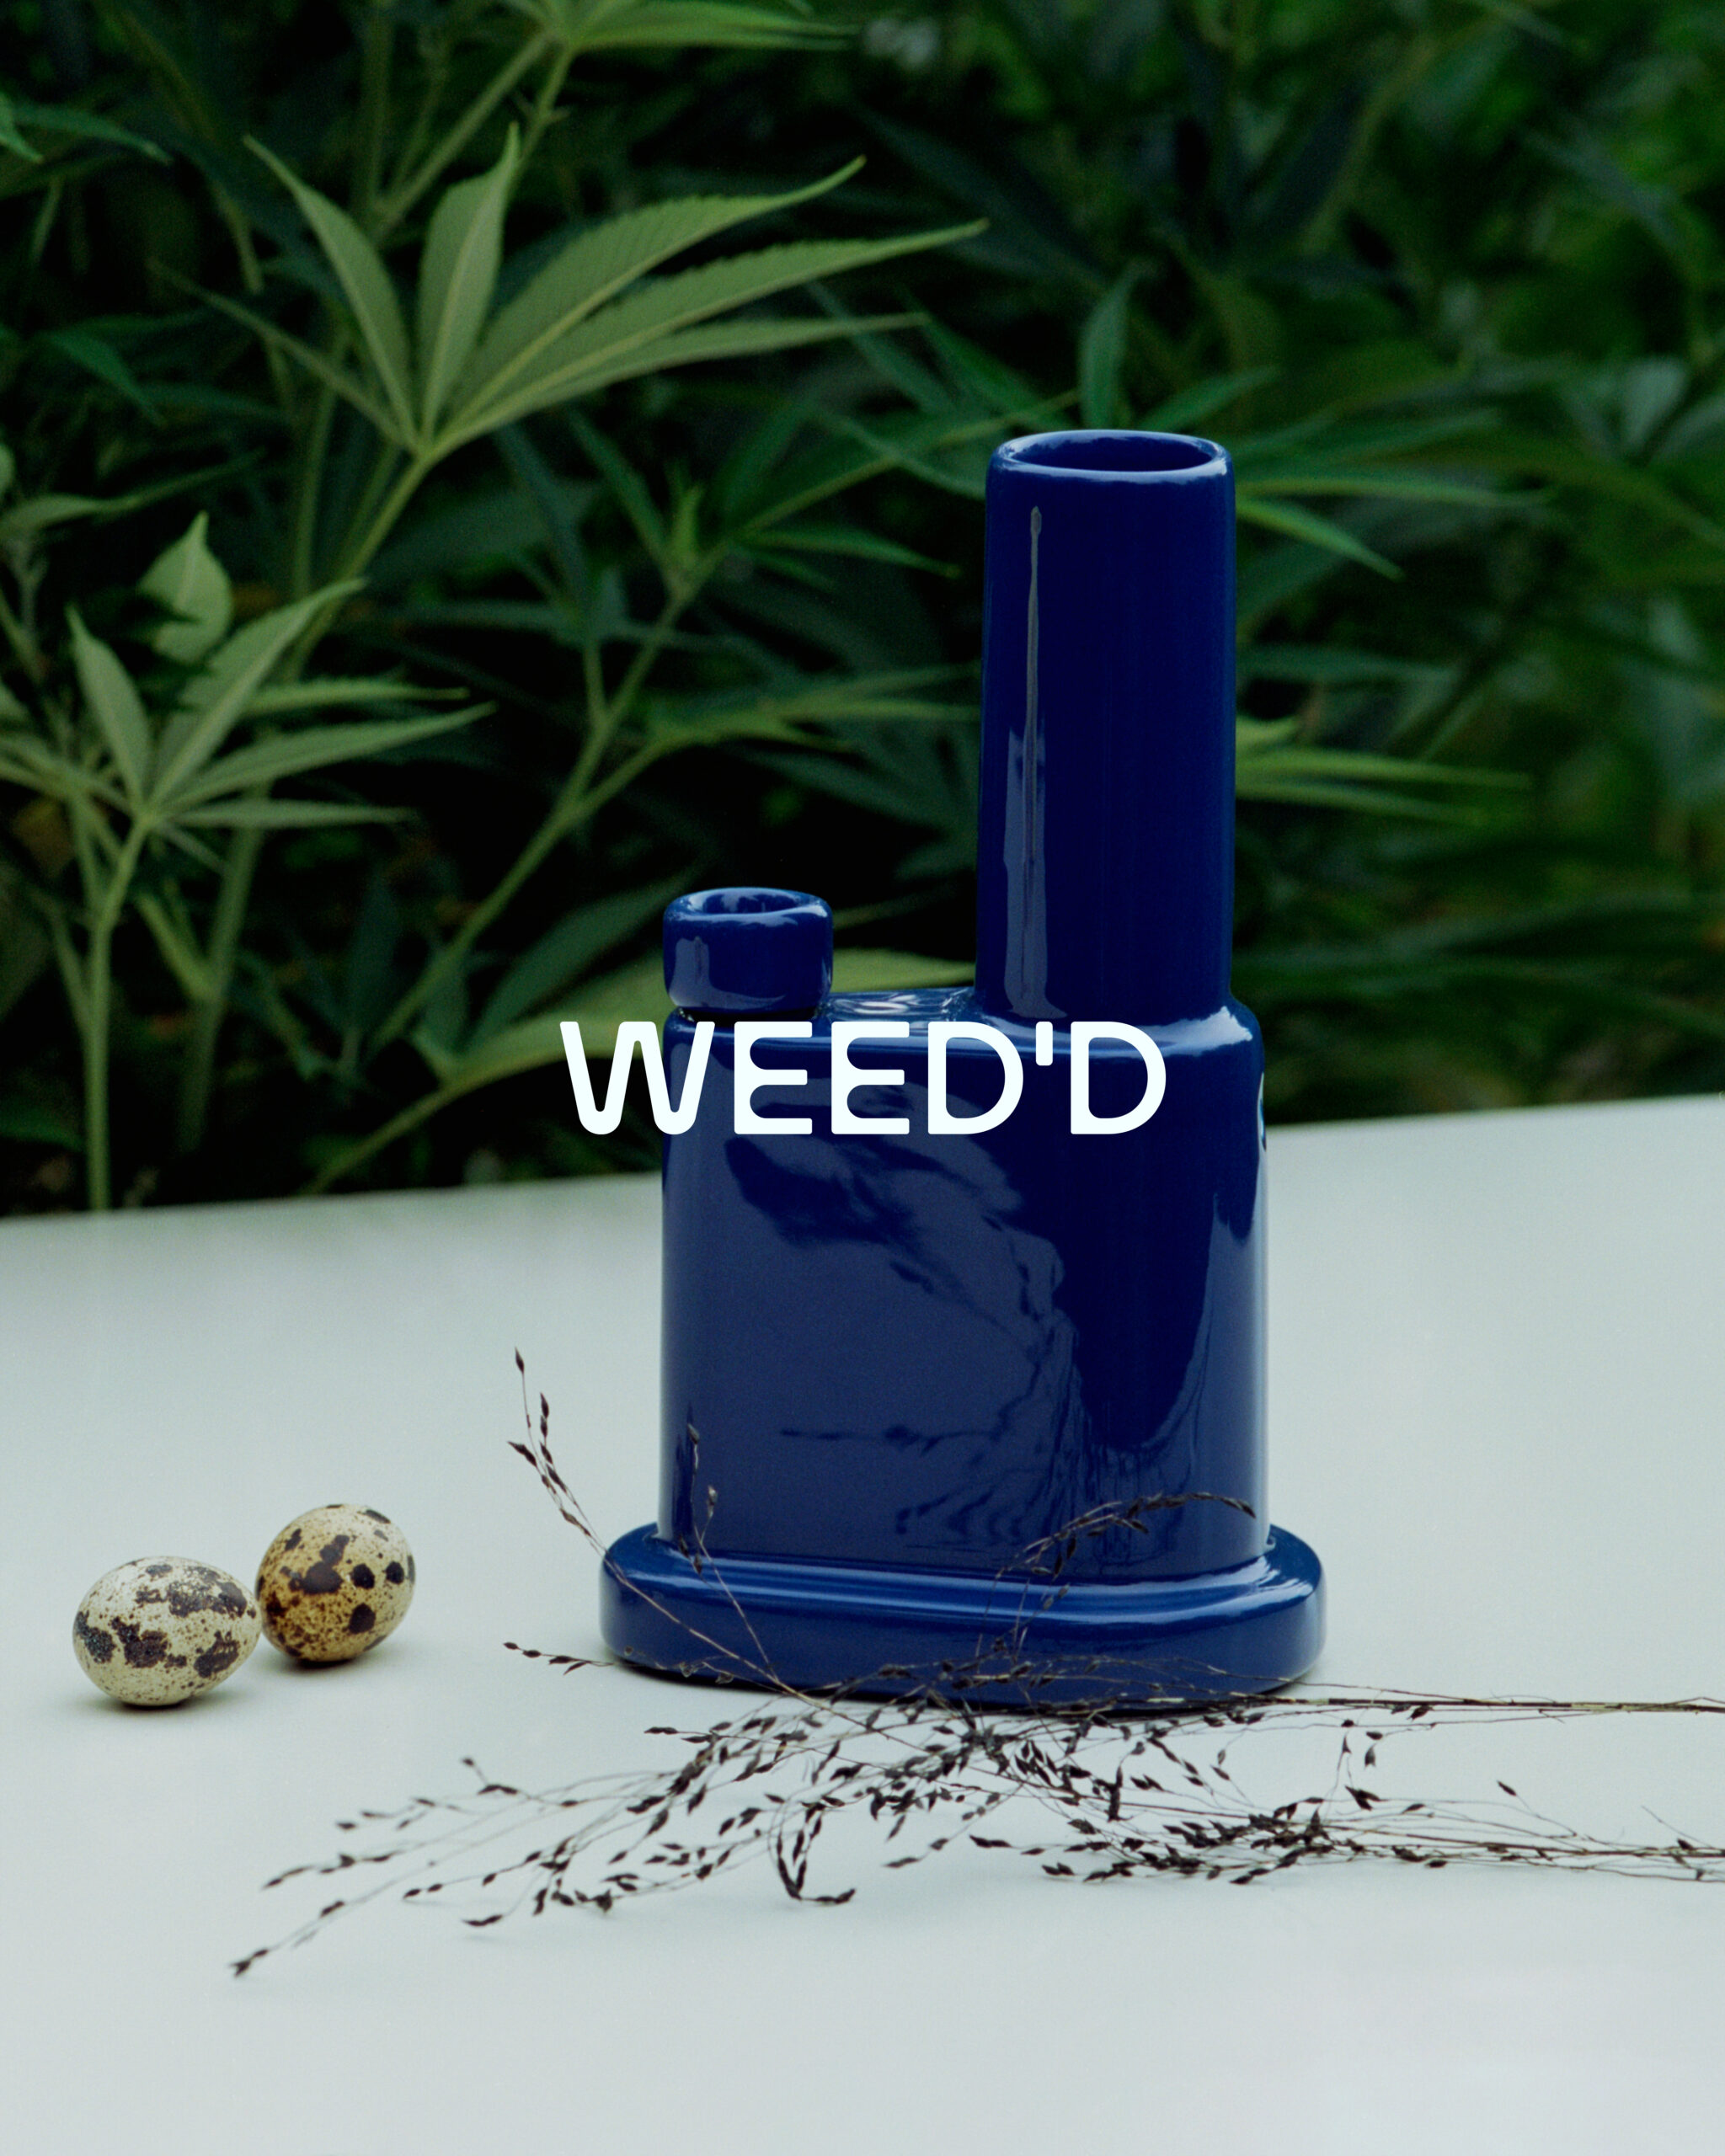 Weed’d